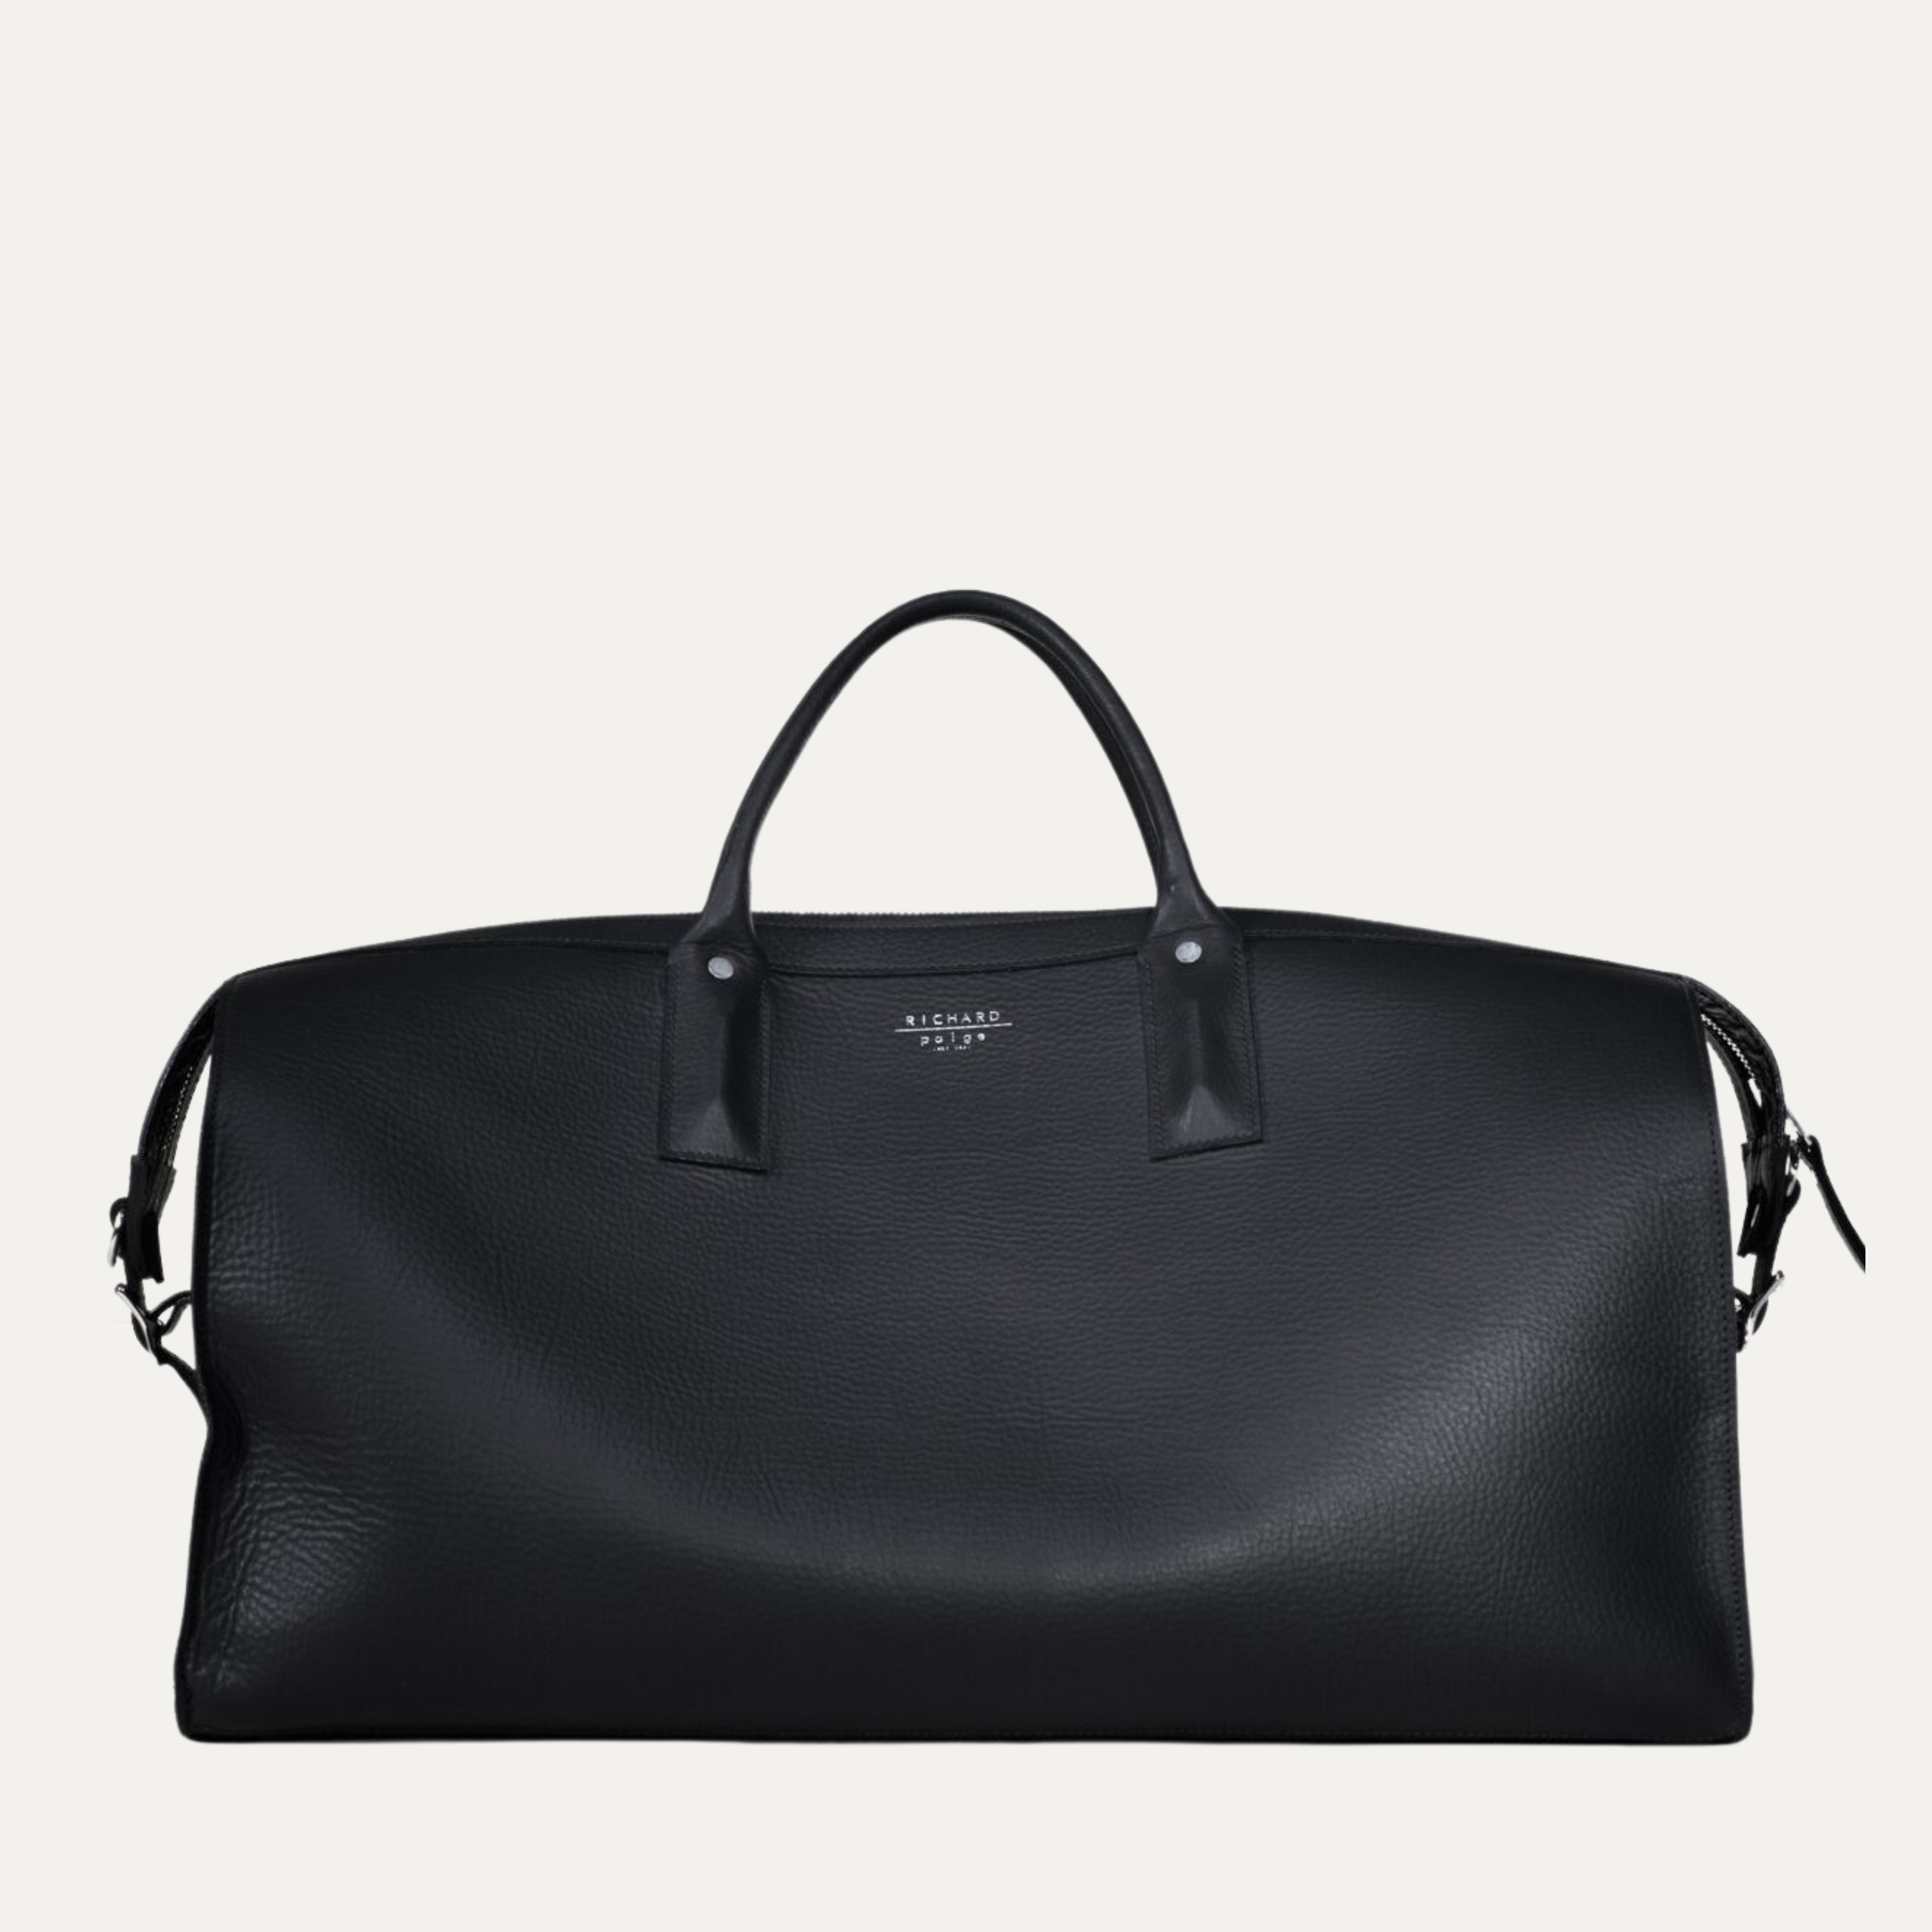 Pebbled Black Leather Weekender Travel Duffle Bag Made in Australia